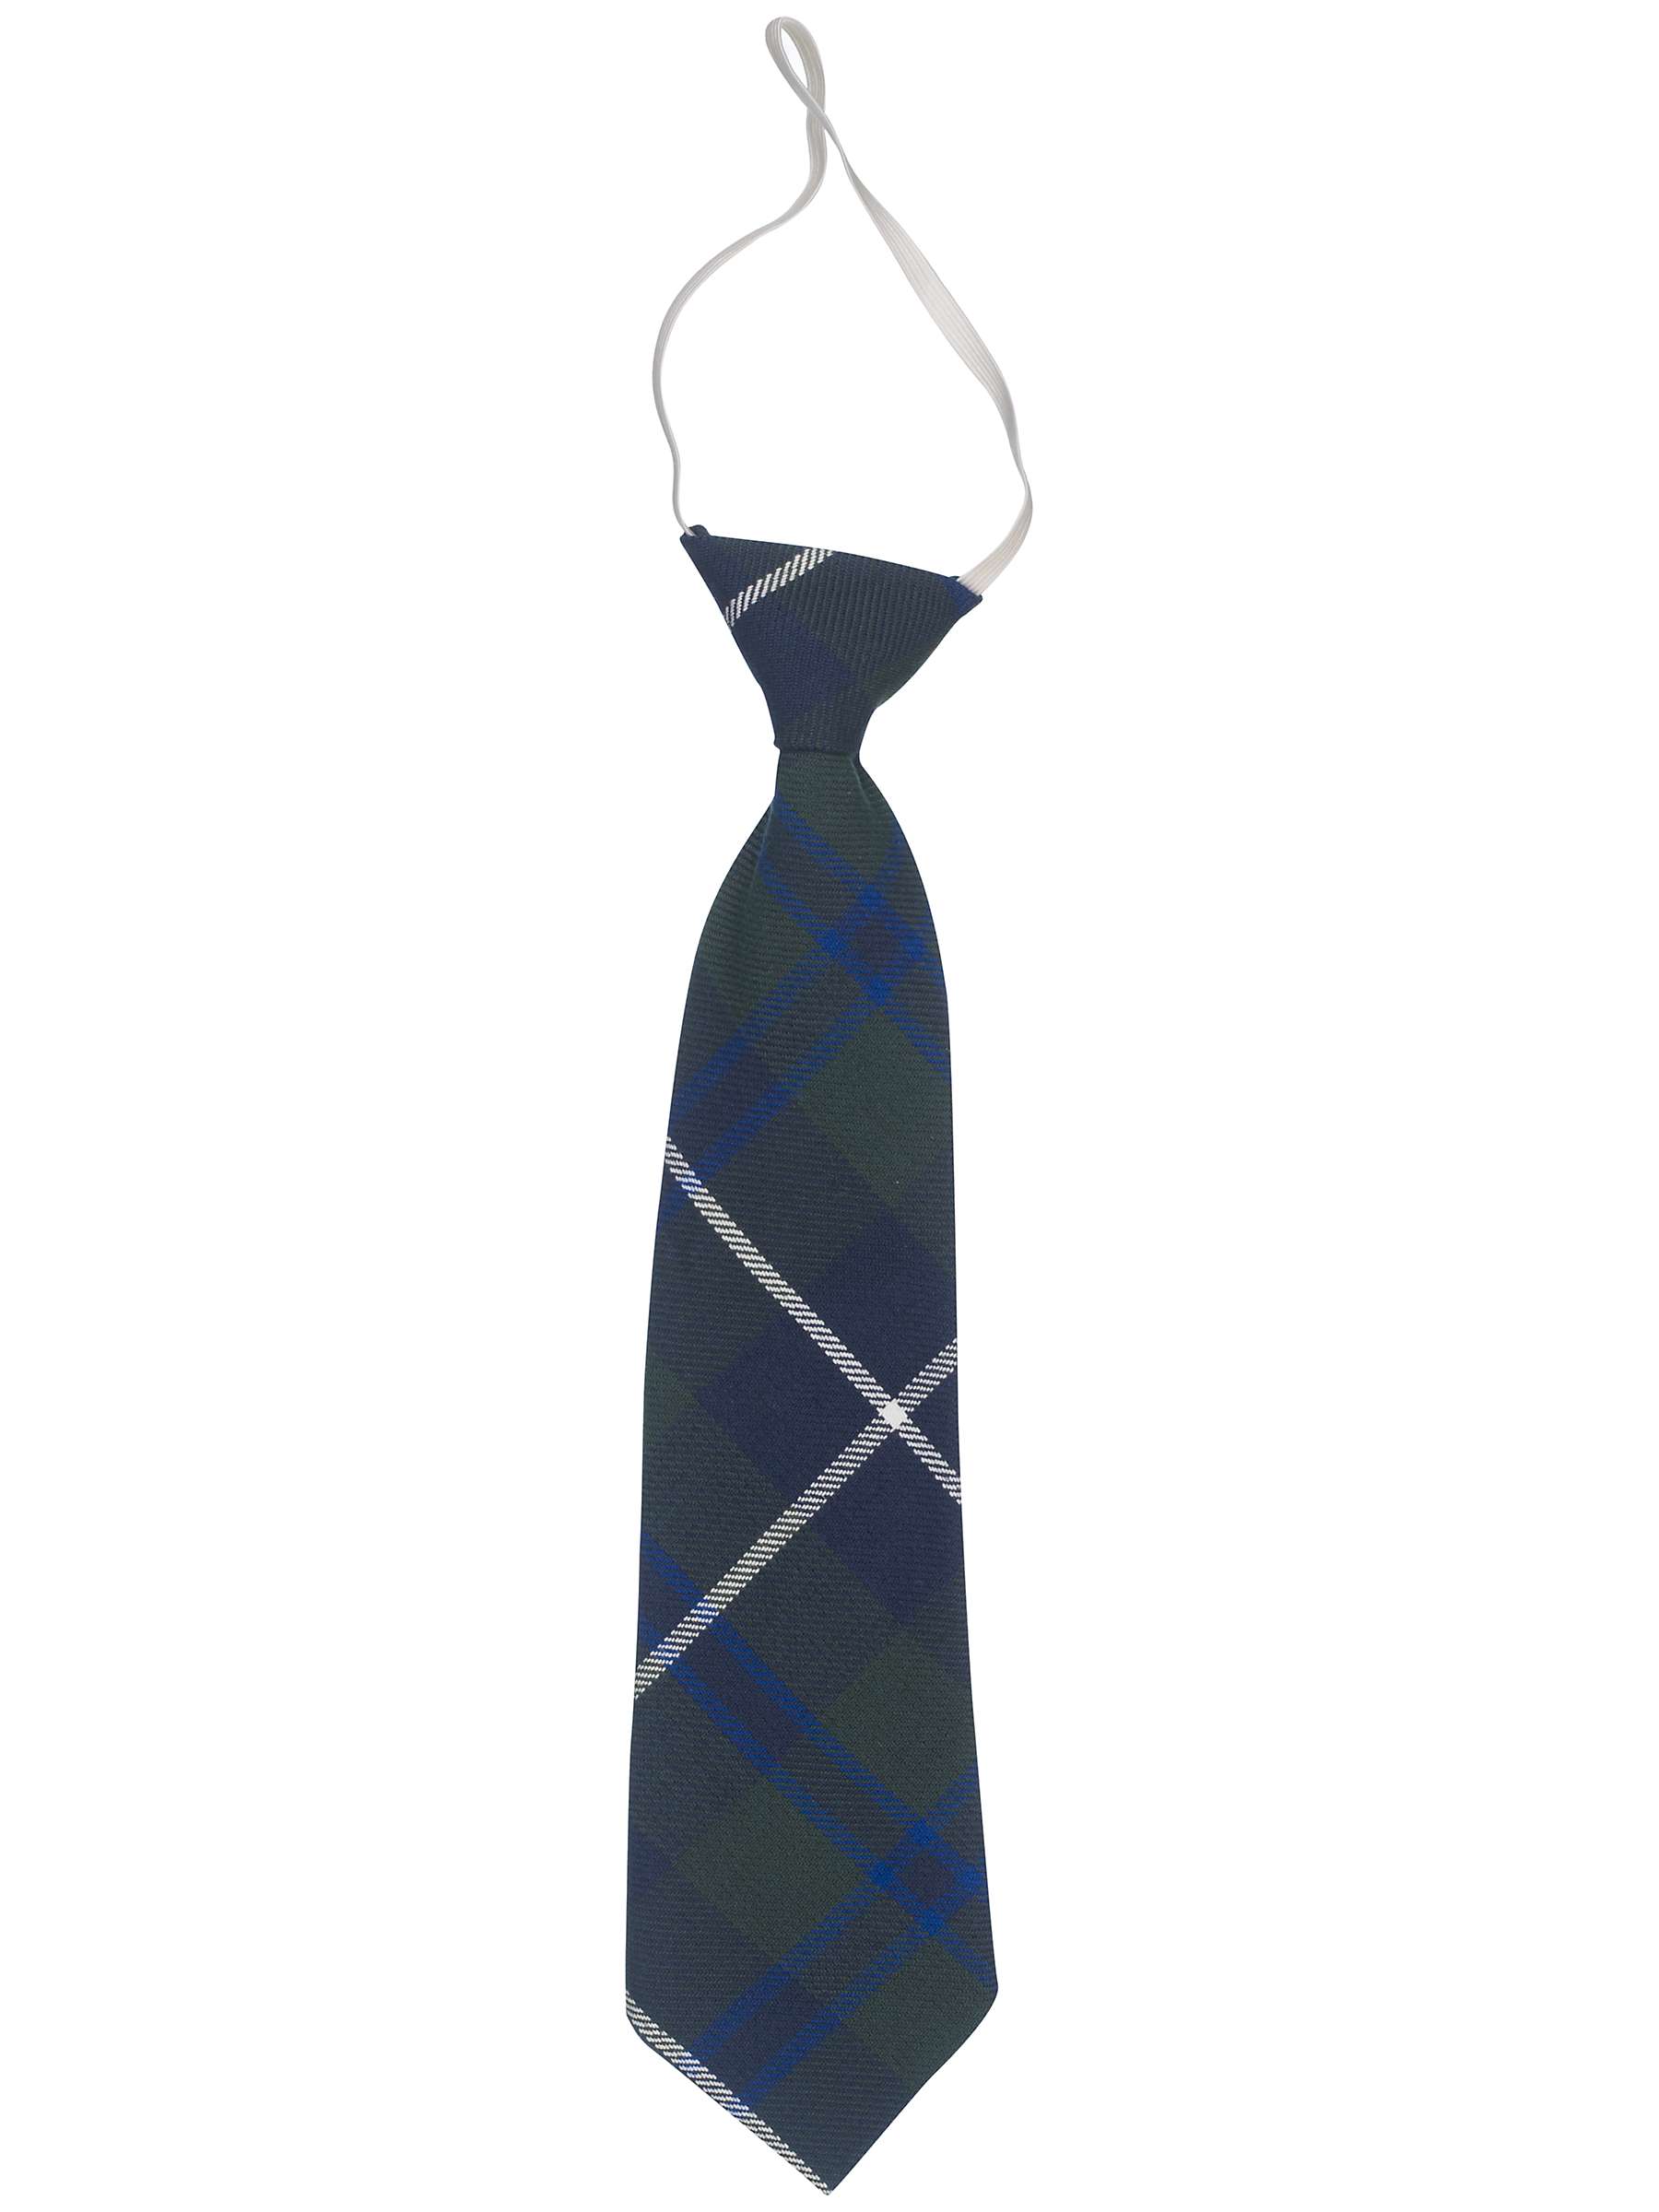 Buy School Boys' Winter Elastic Tie, Tartan Online at johnlewis.com